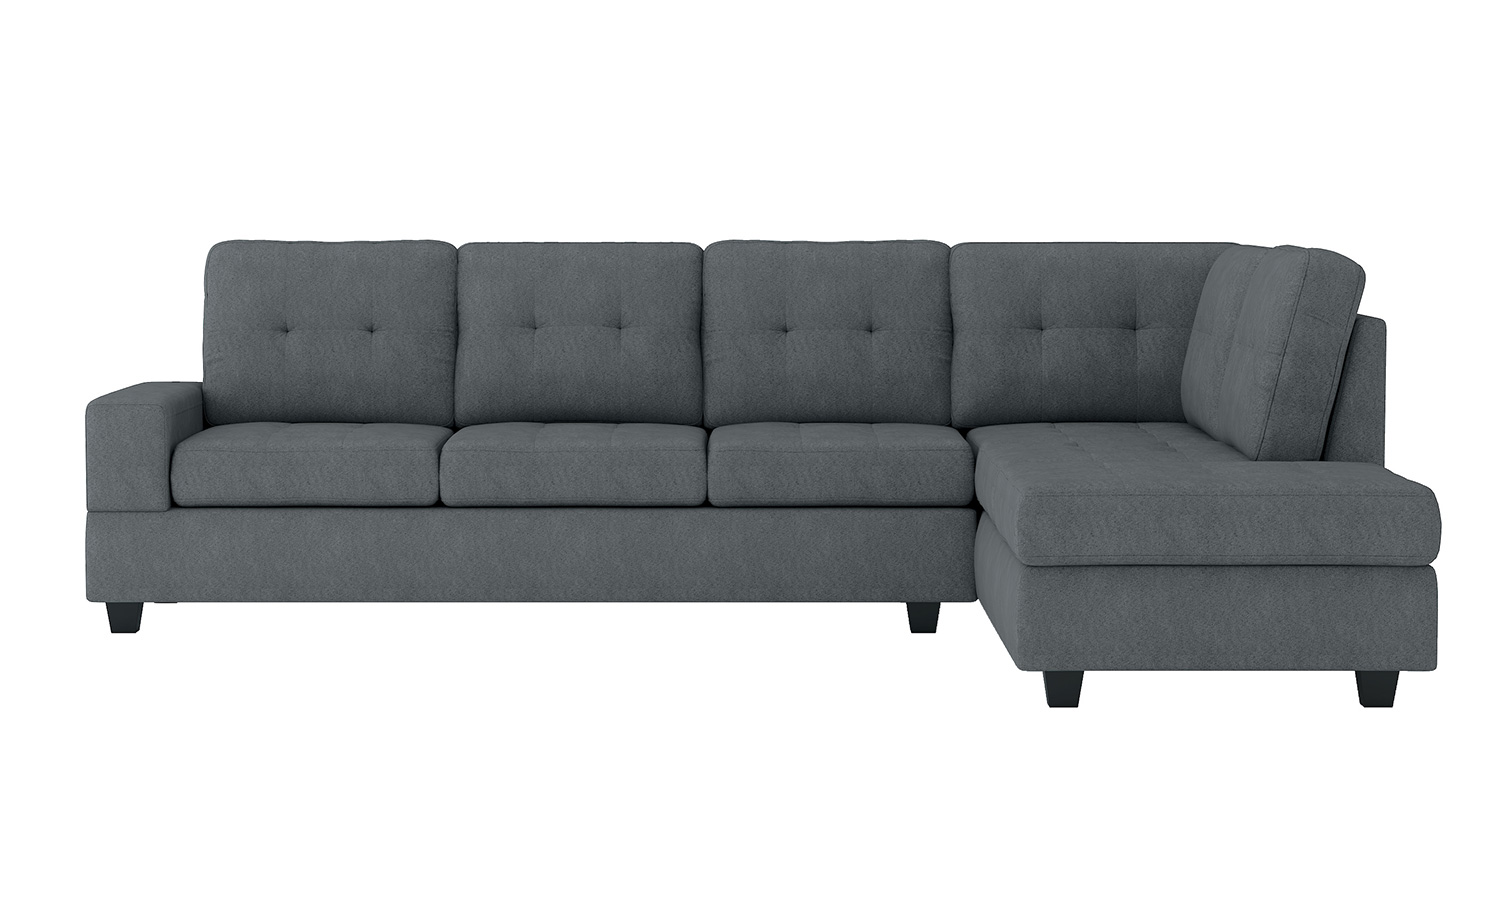 Homelegance Maston Sectional Sofa Set - Dark gray